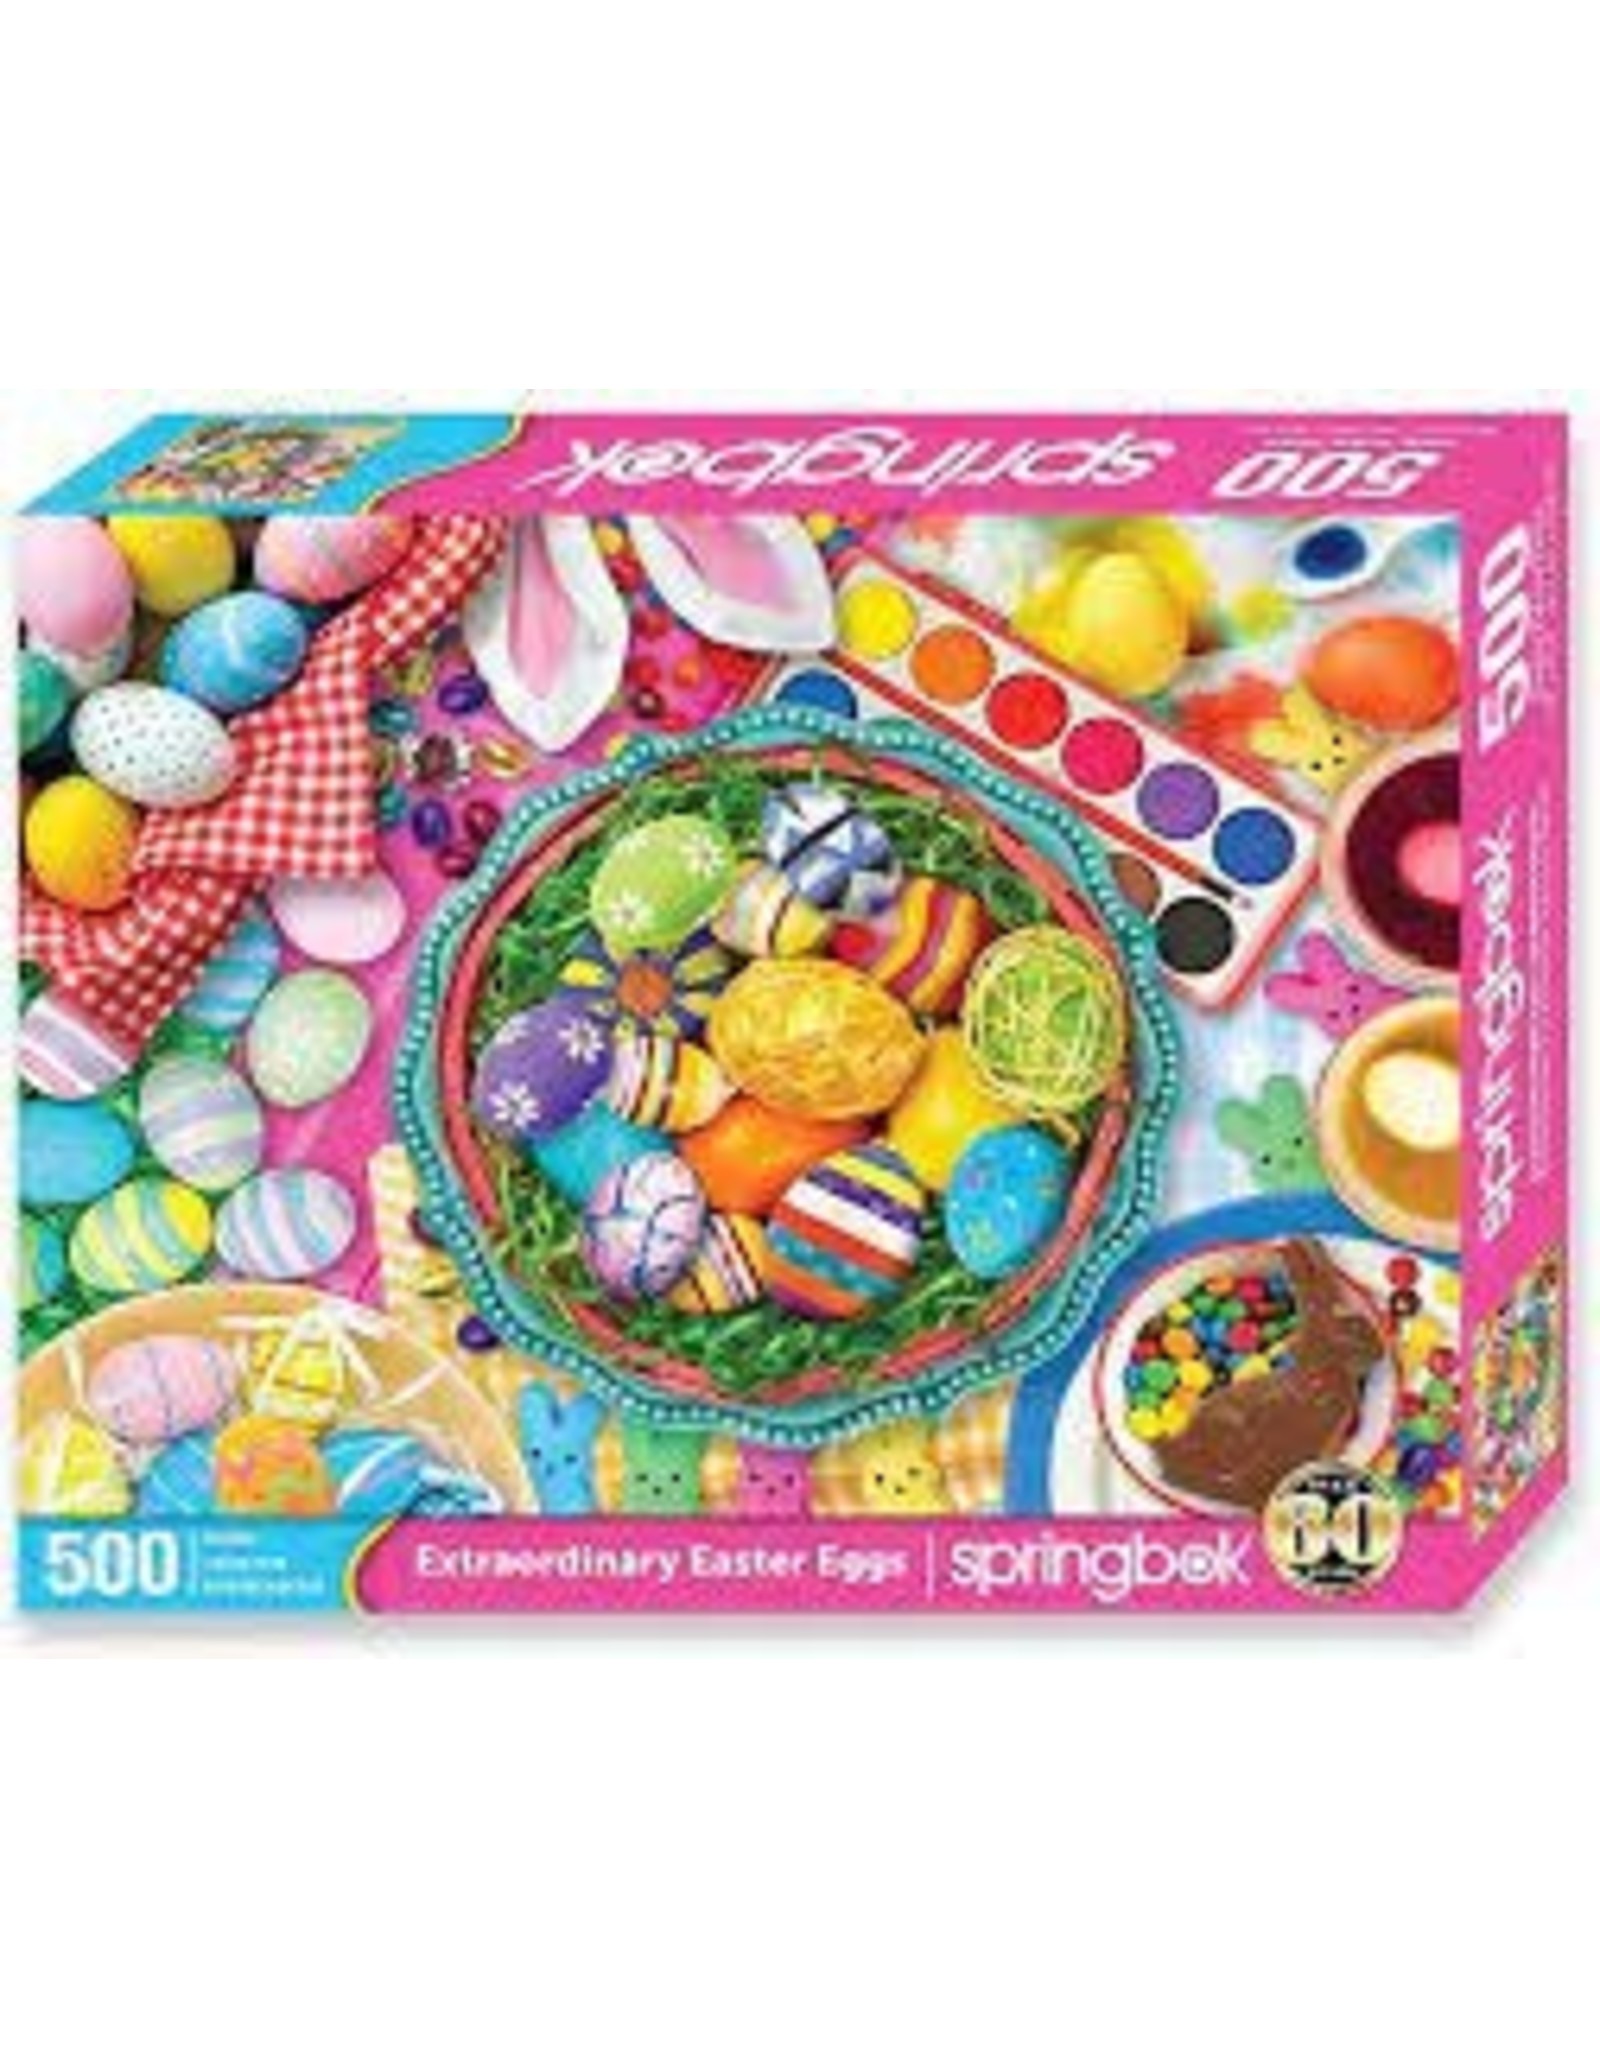 Extraordinary Easter Eggs 500 pc